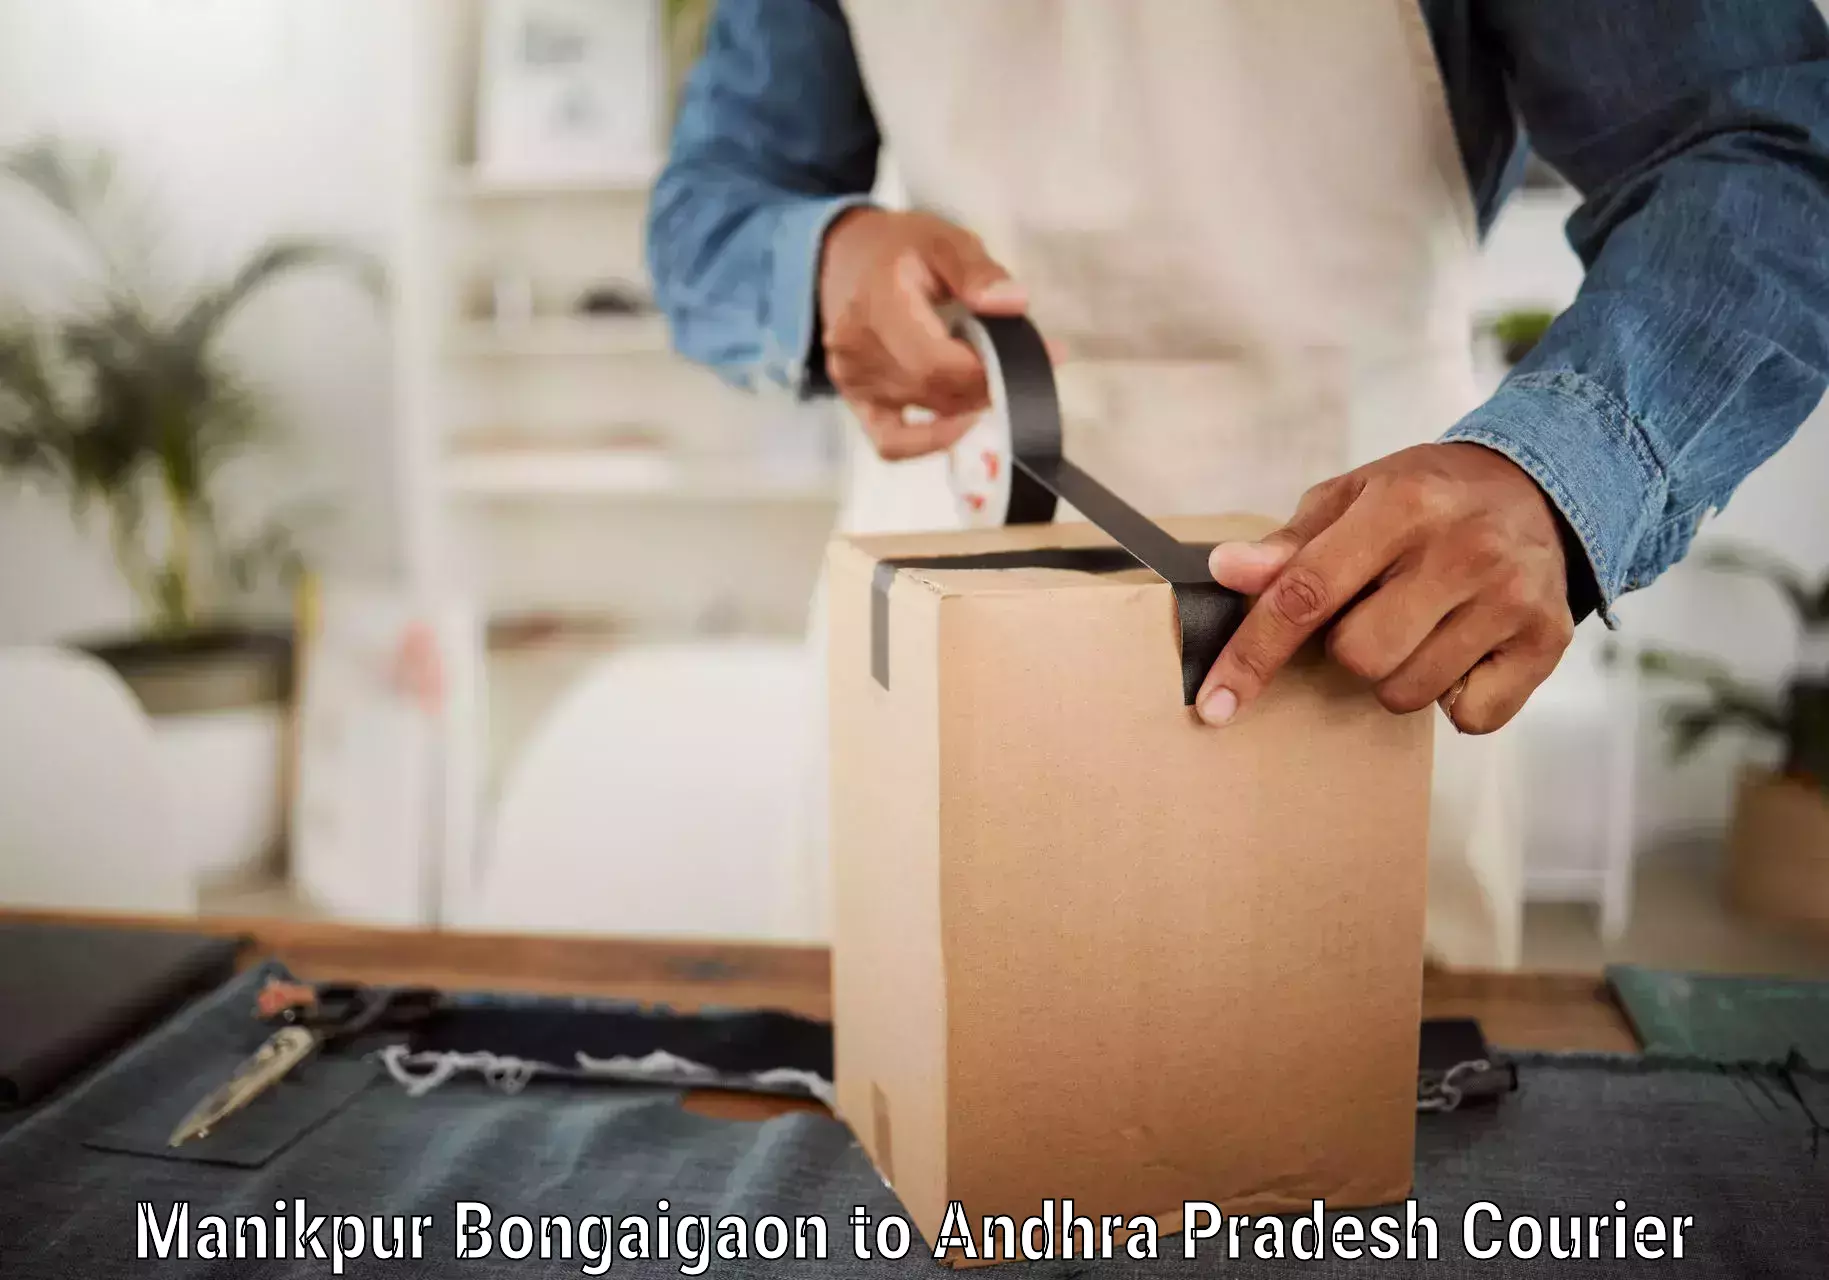 Courier service partnerships Manikpur Bongaigaon to Addateegala